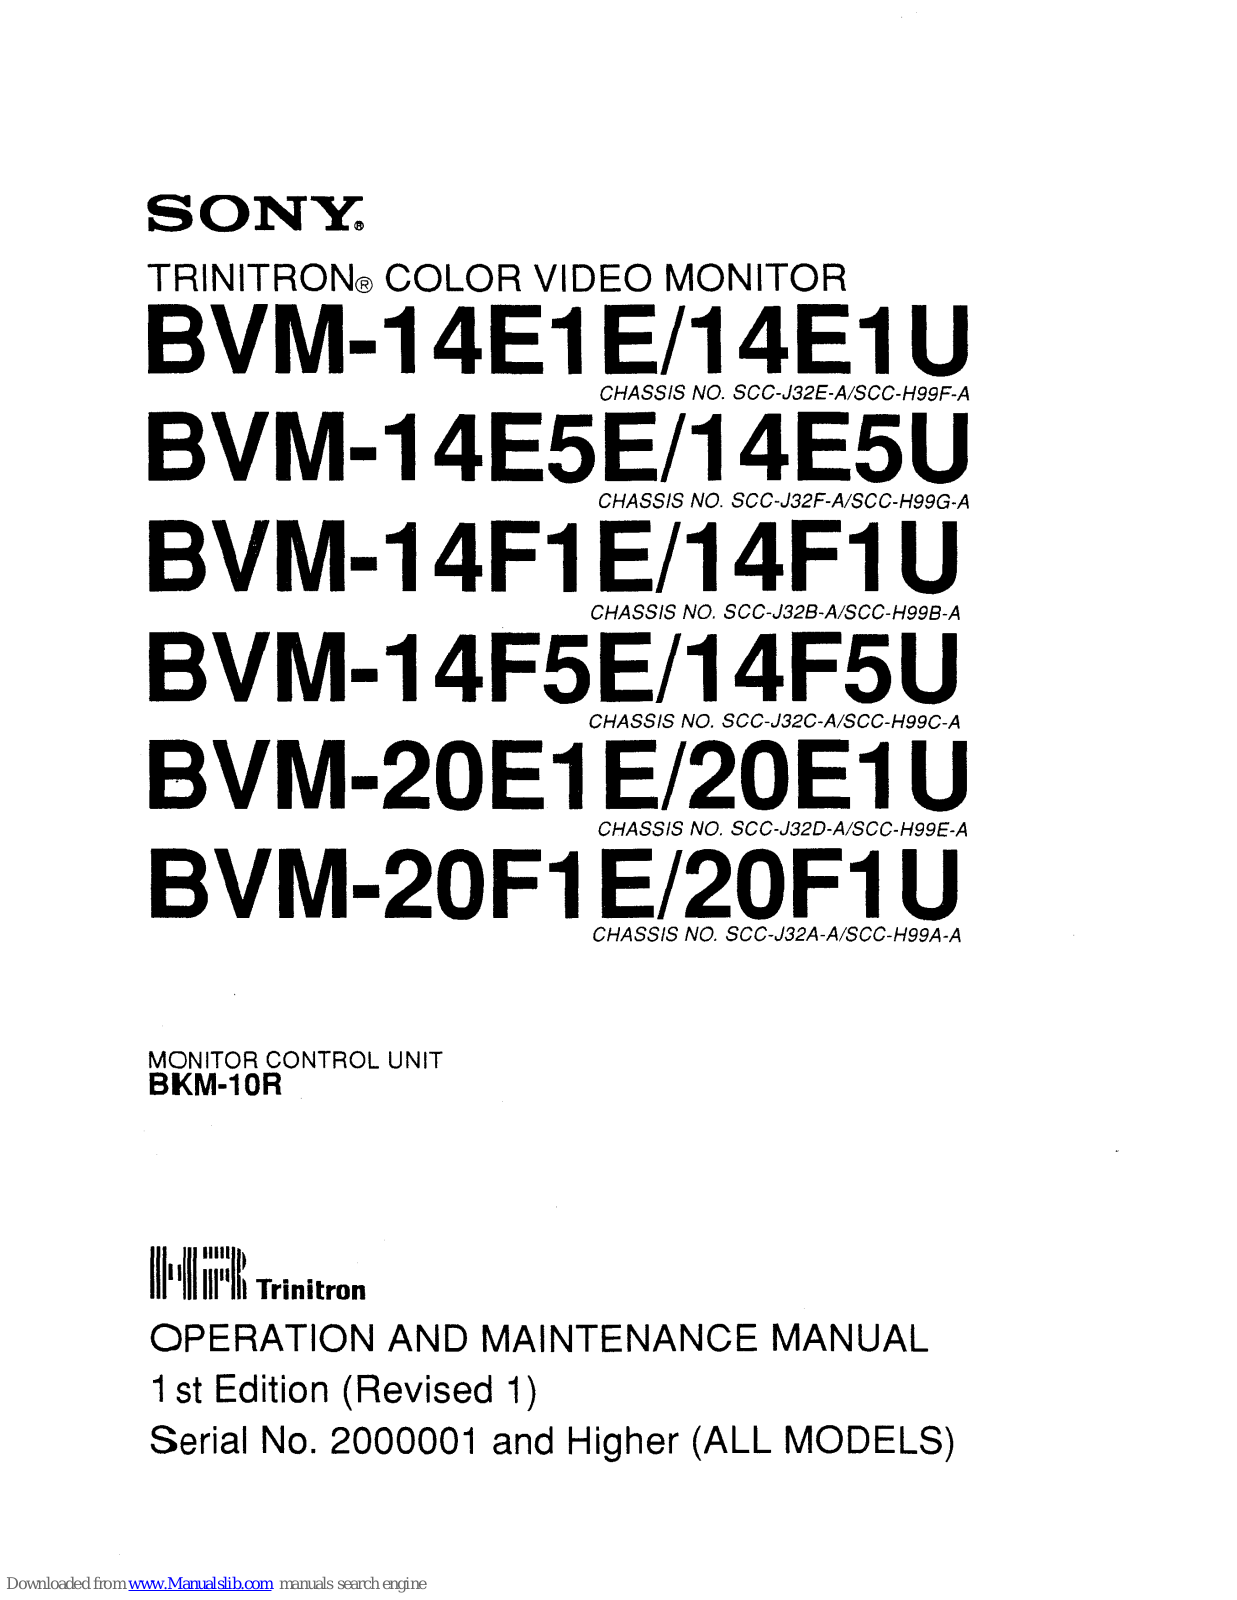 Sony BVM-14E1E, BVM-14E1U, BVM-14F1U, BVM-14F5E, BVM-14F5U Operation And Maintenance Manual